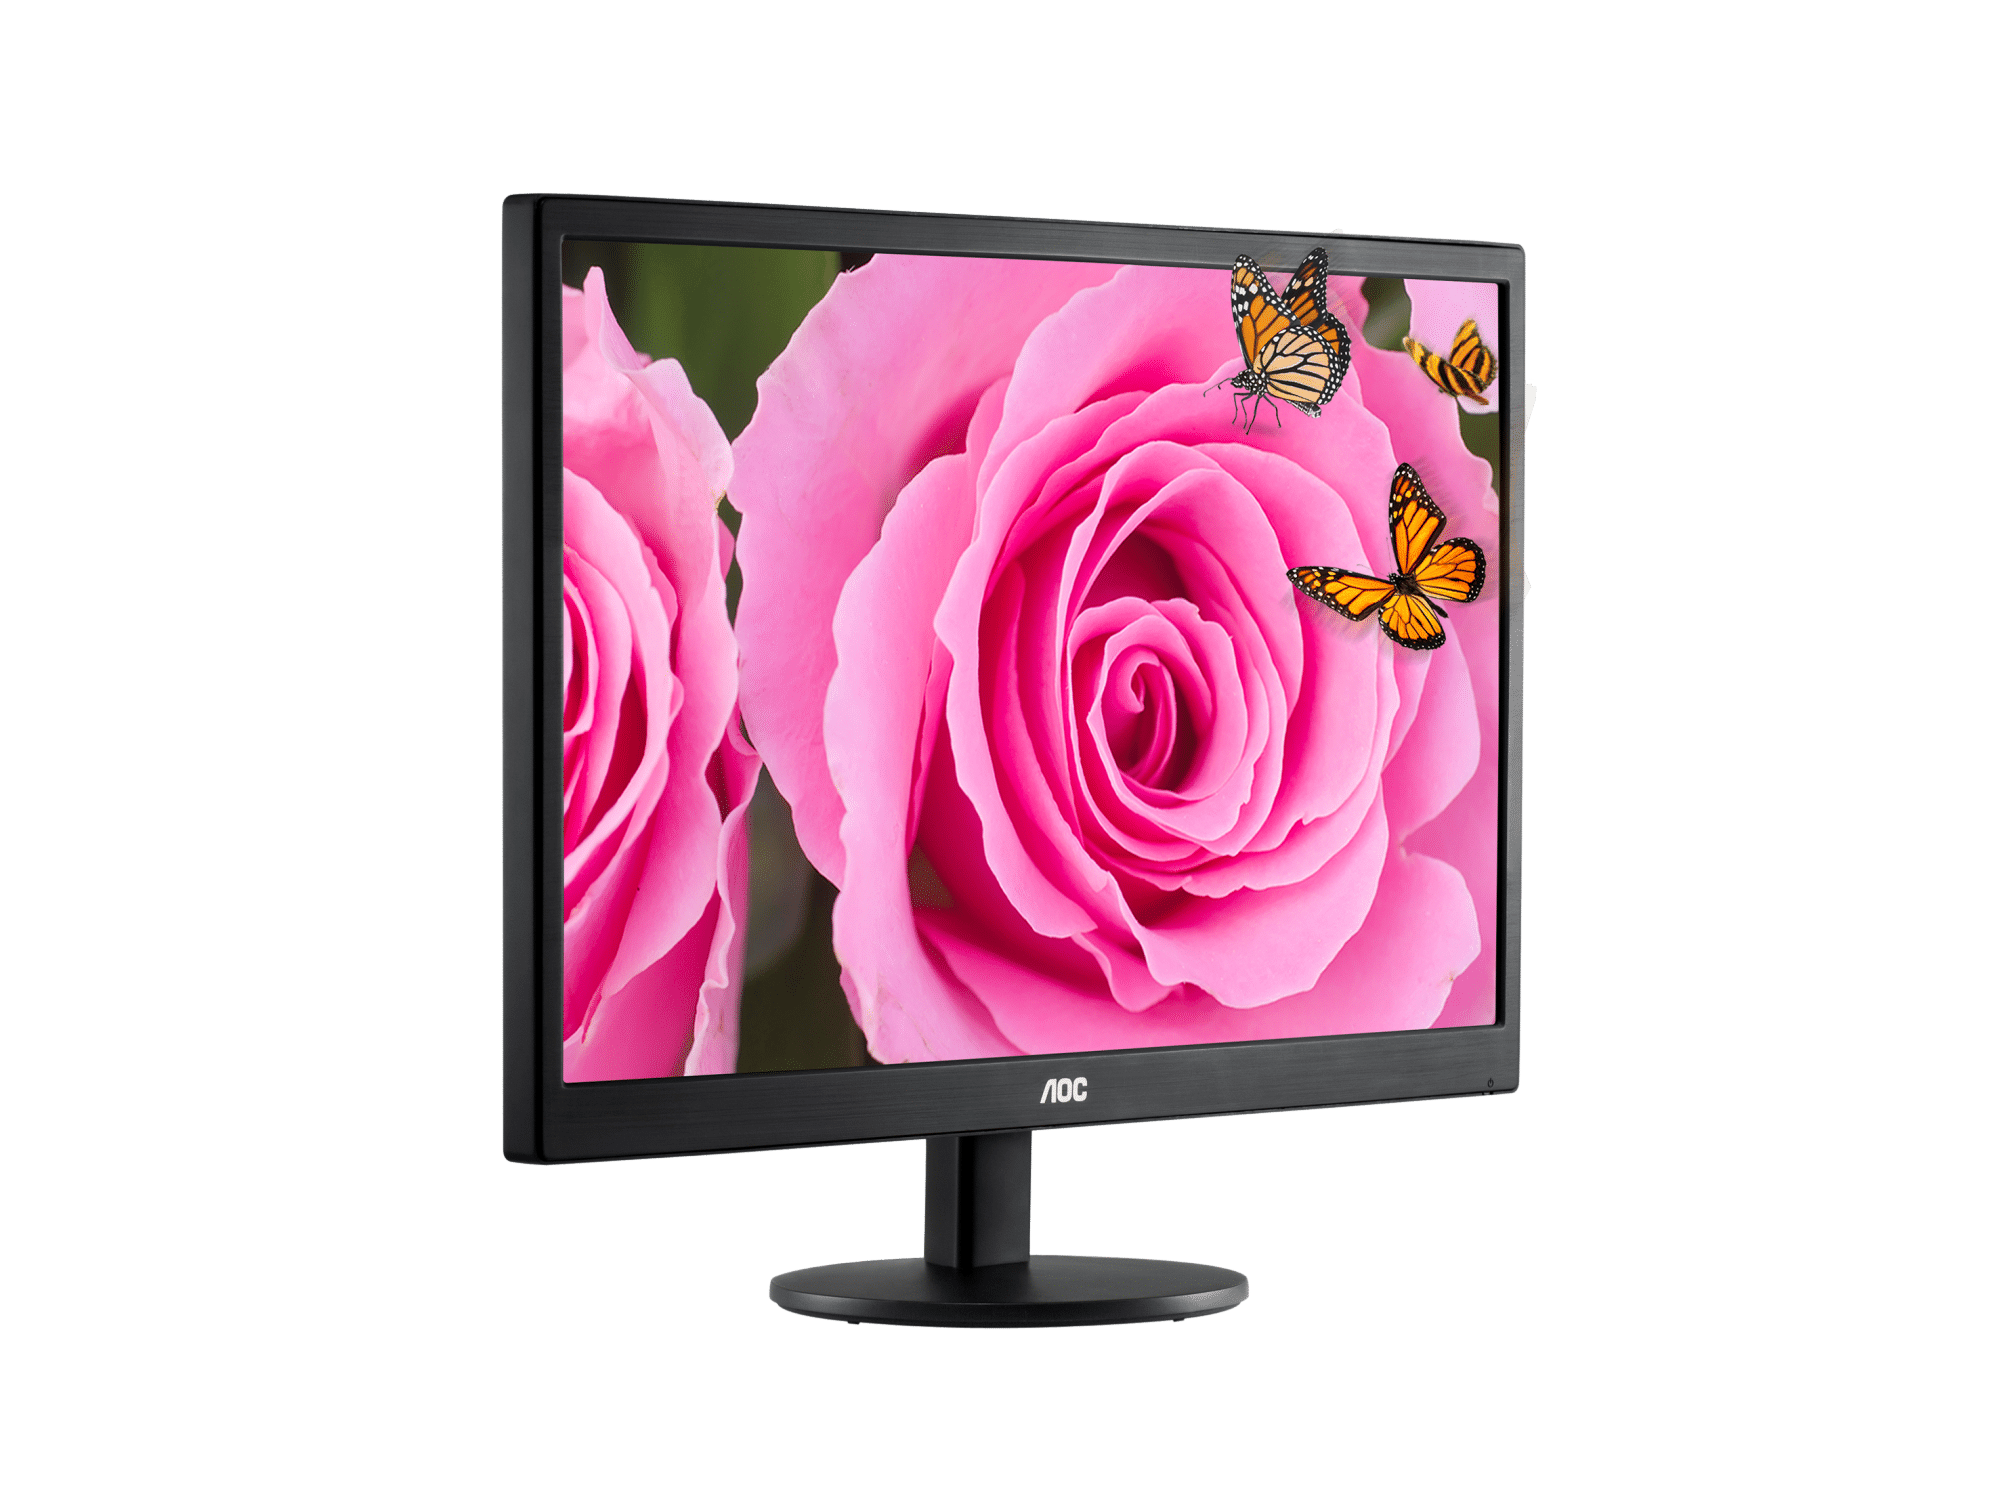 AOC LCD Monitor TFT185W80PS 18.5 inch Black